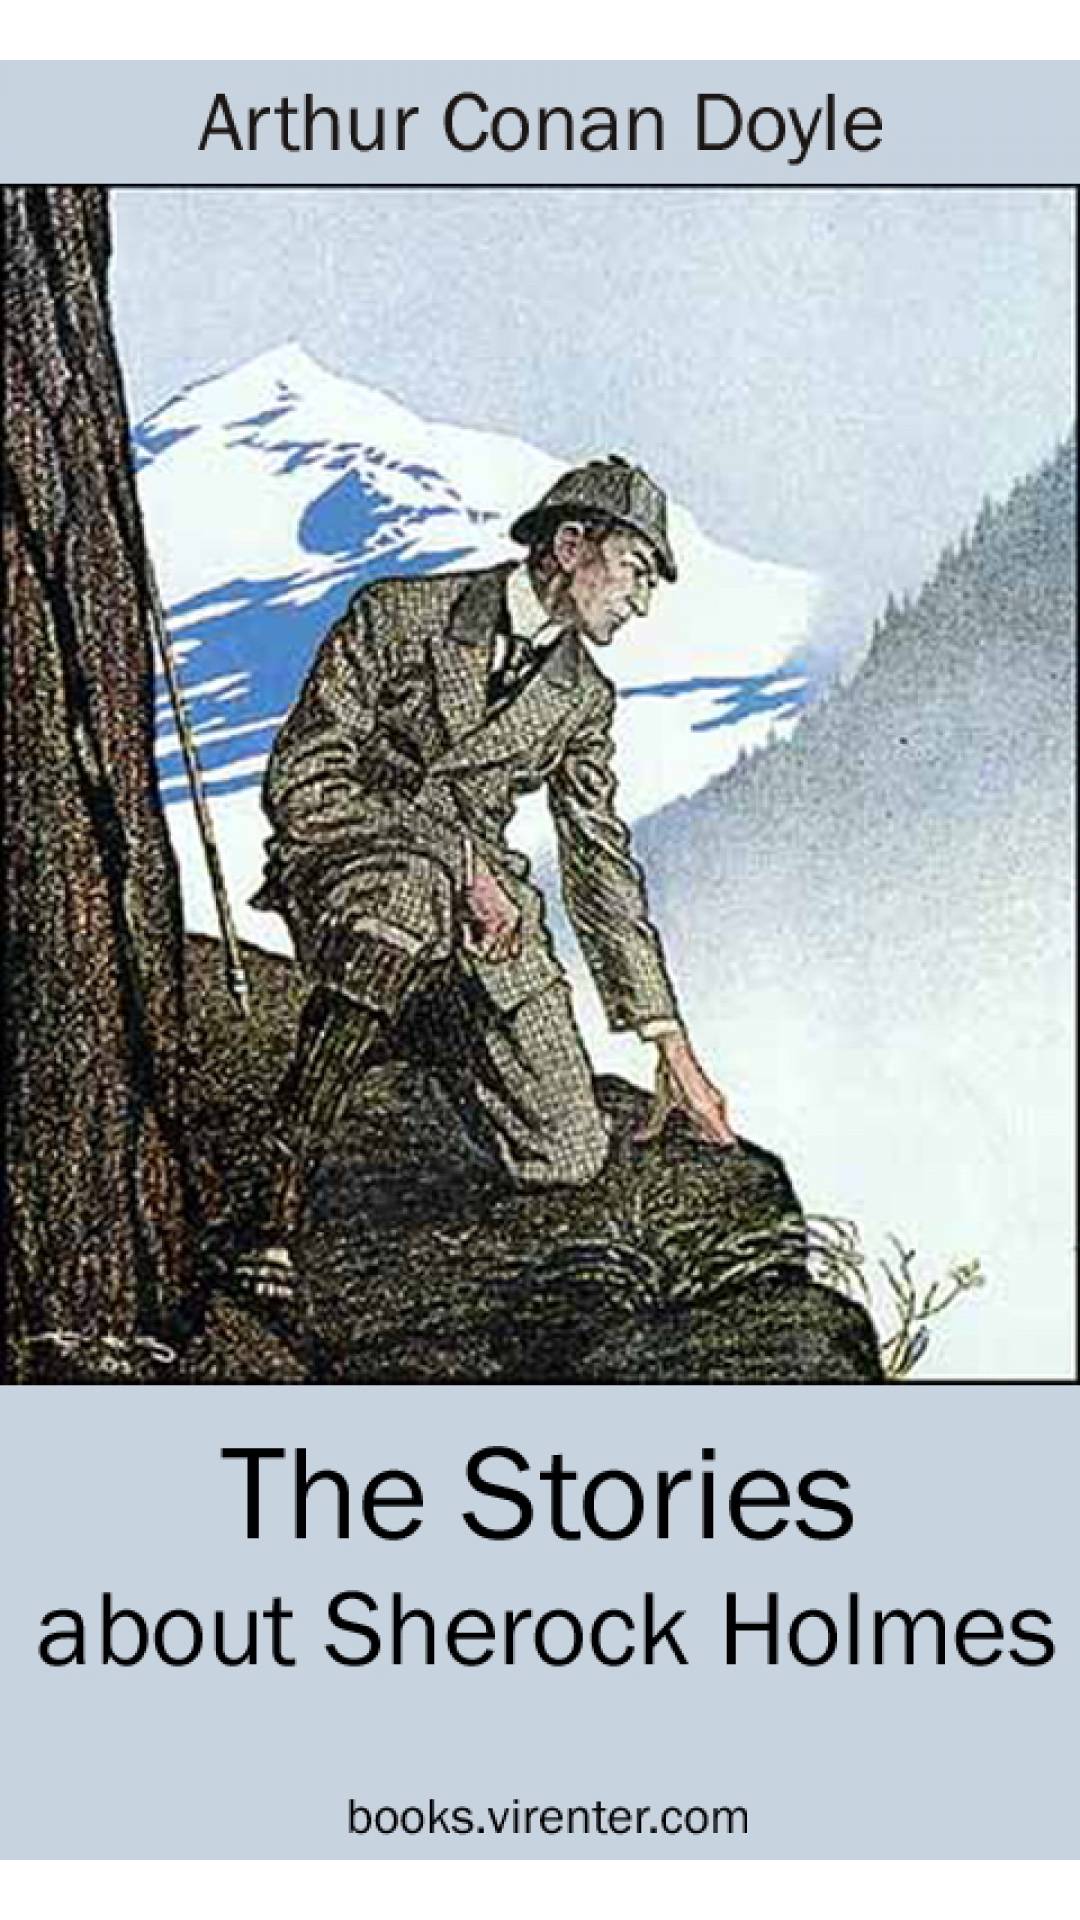 Arthur Conan Doyle - The Stories about Sherlock Holmes